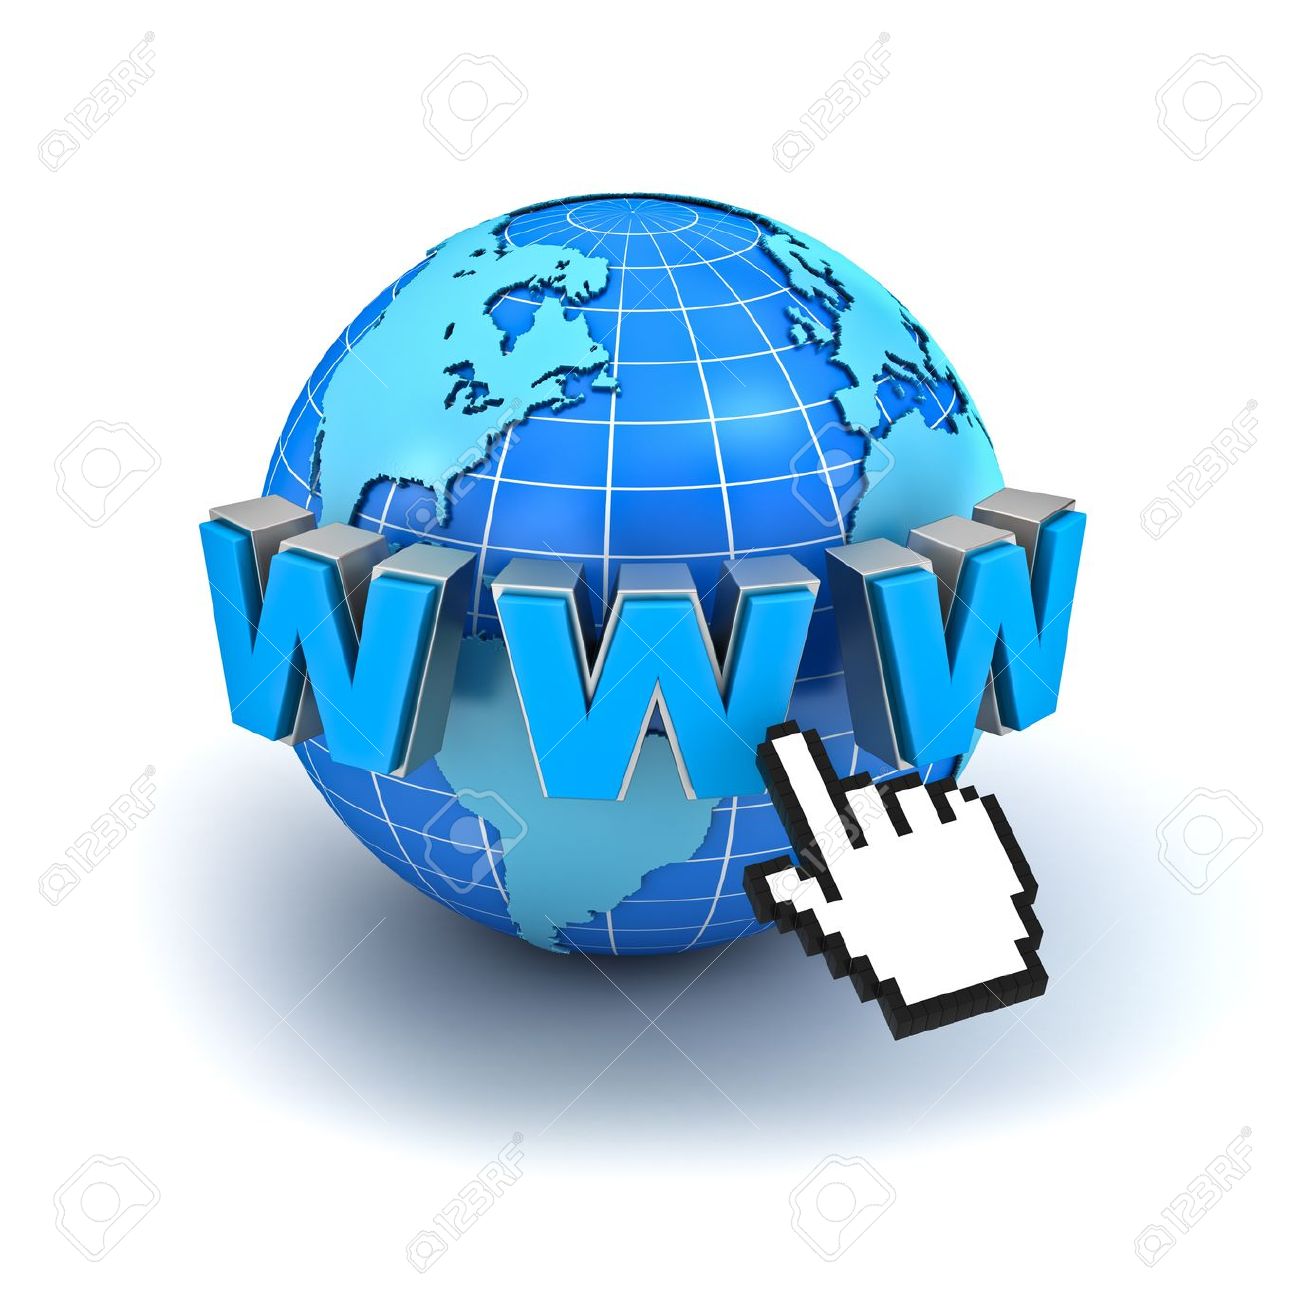 world-wide-web.jpg